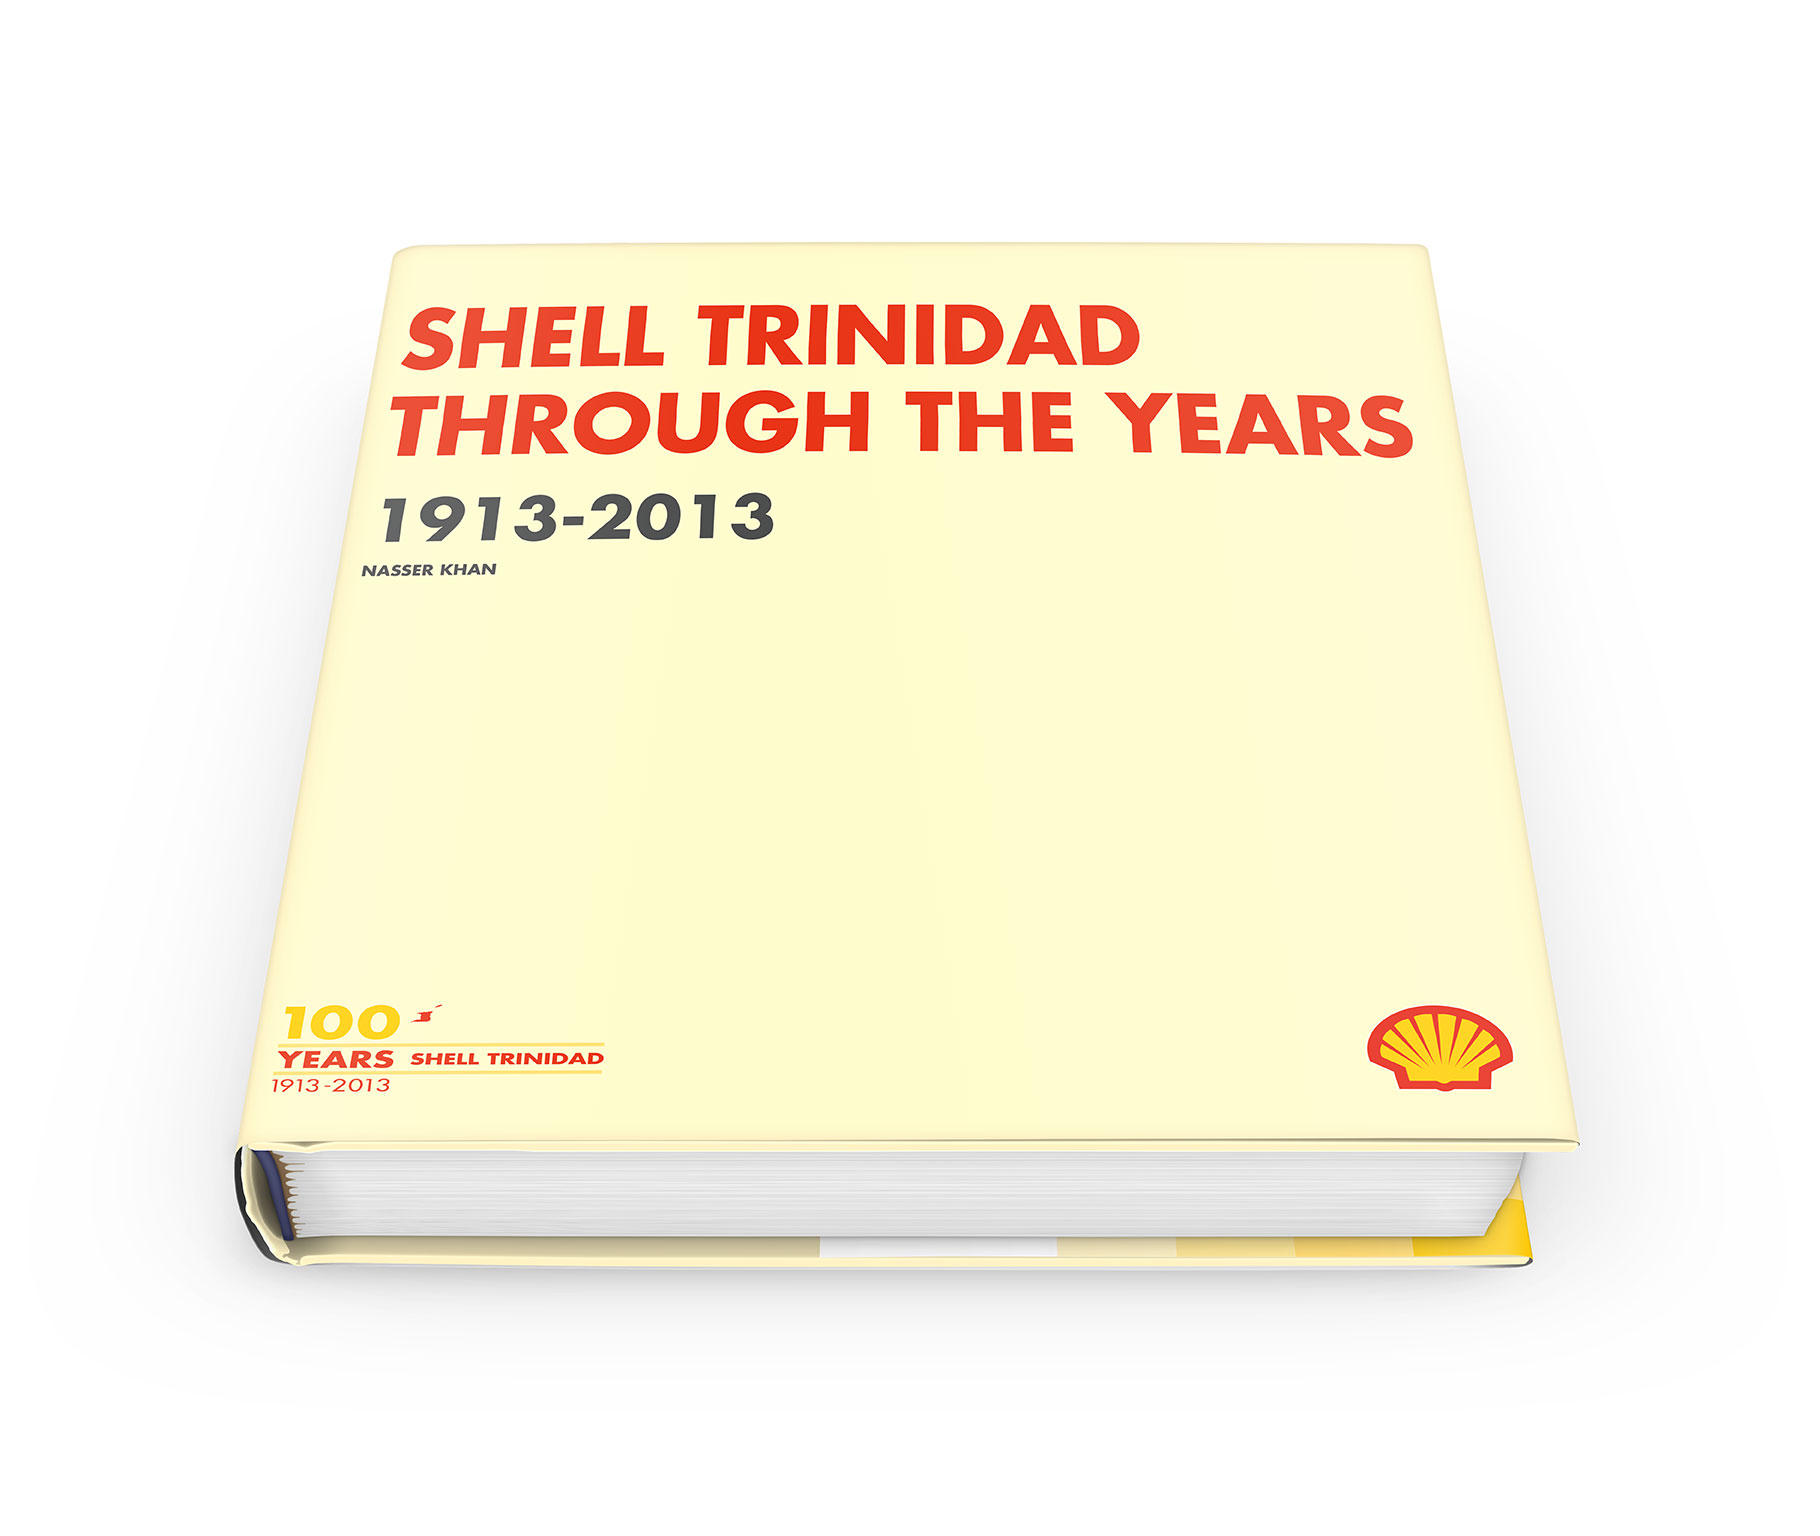 Shell Trinidad through the years - 1913-2013